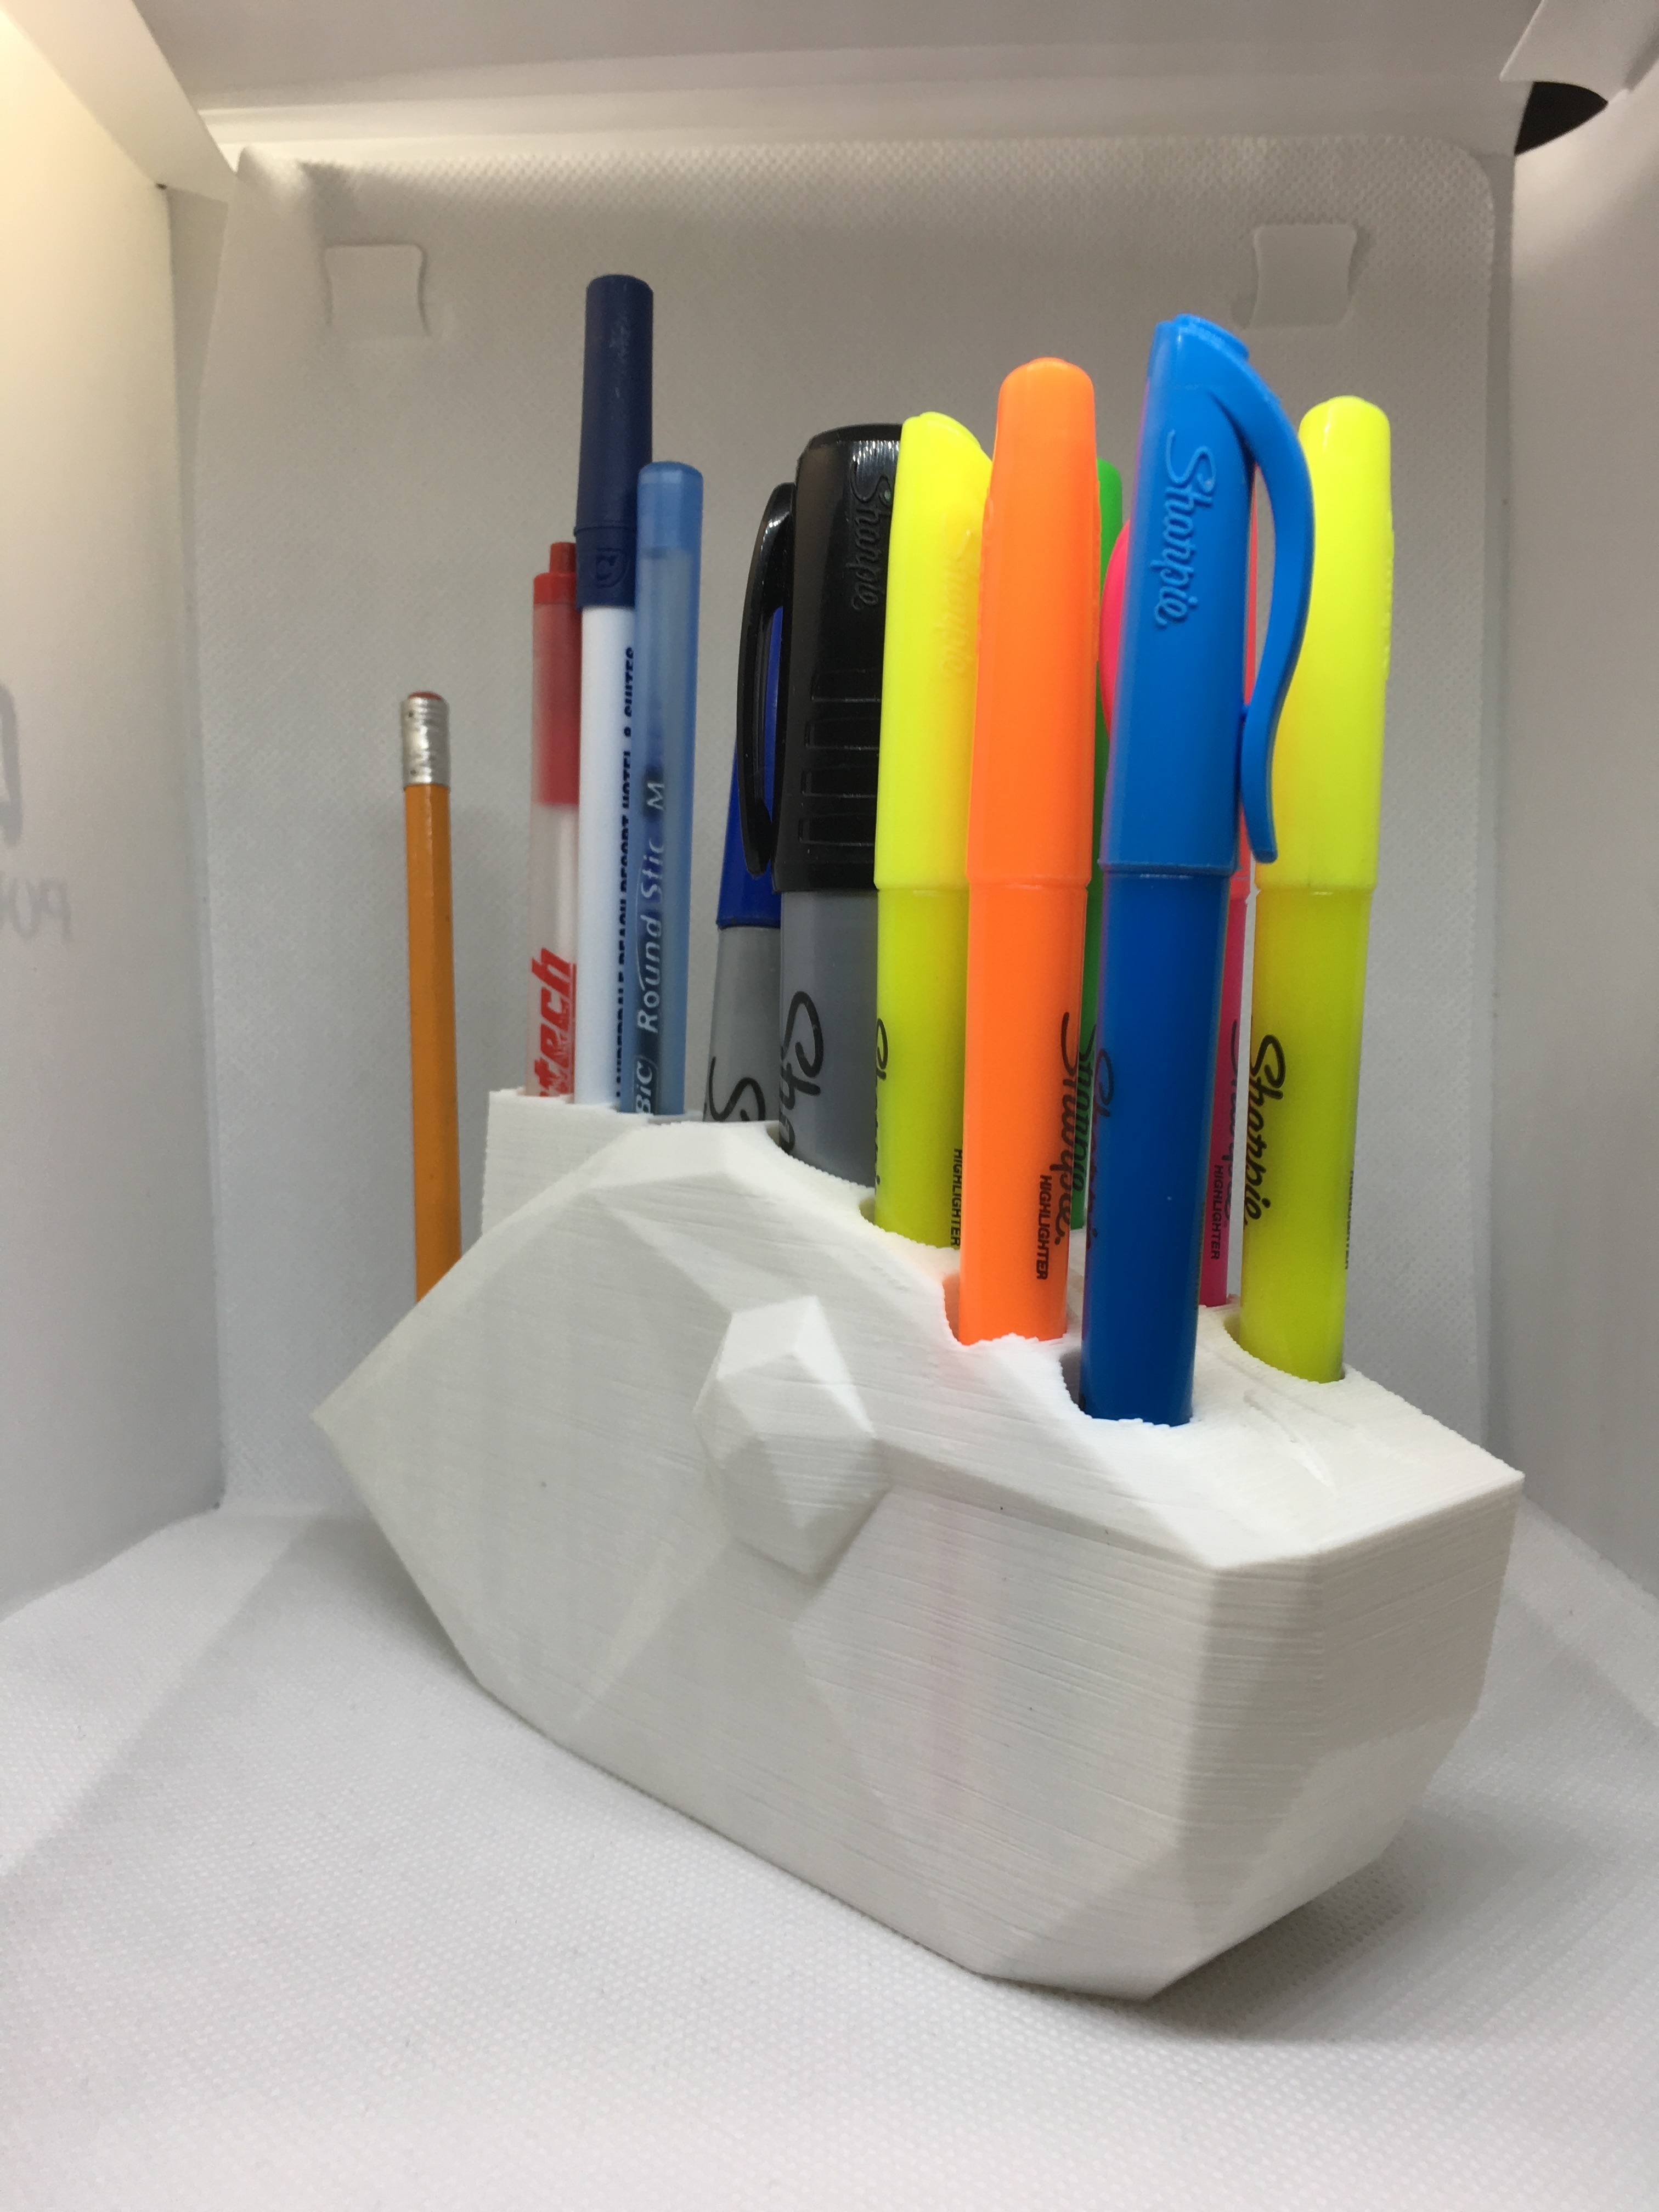 Sharpie holder 3D models for 3D printing